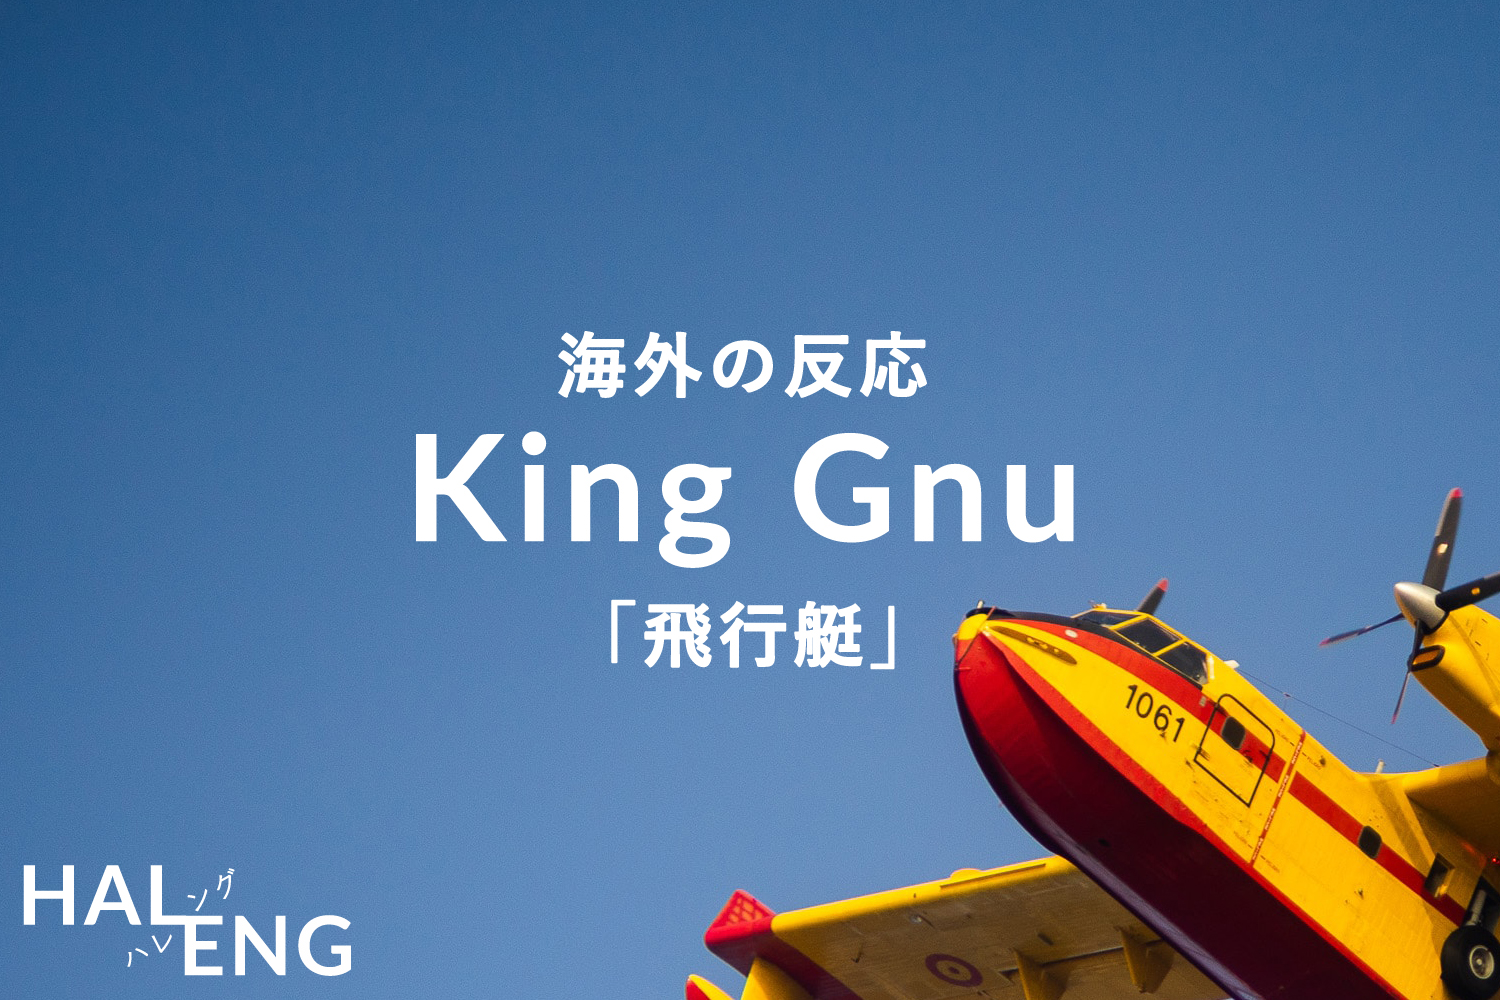 King Gnu 飛行艇 海外の反応は 外国人に聴かせてみた Haleng ハレング